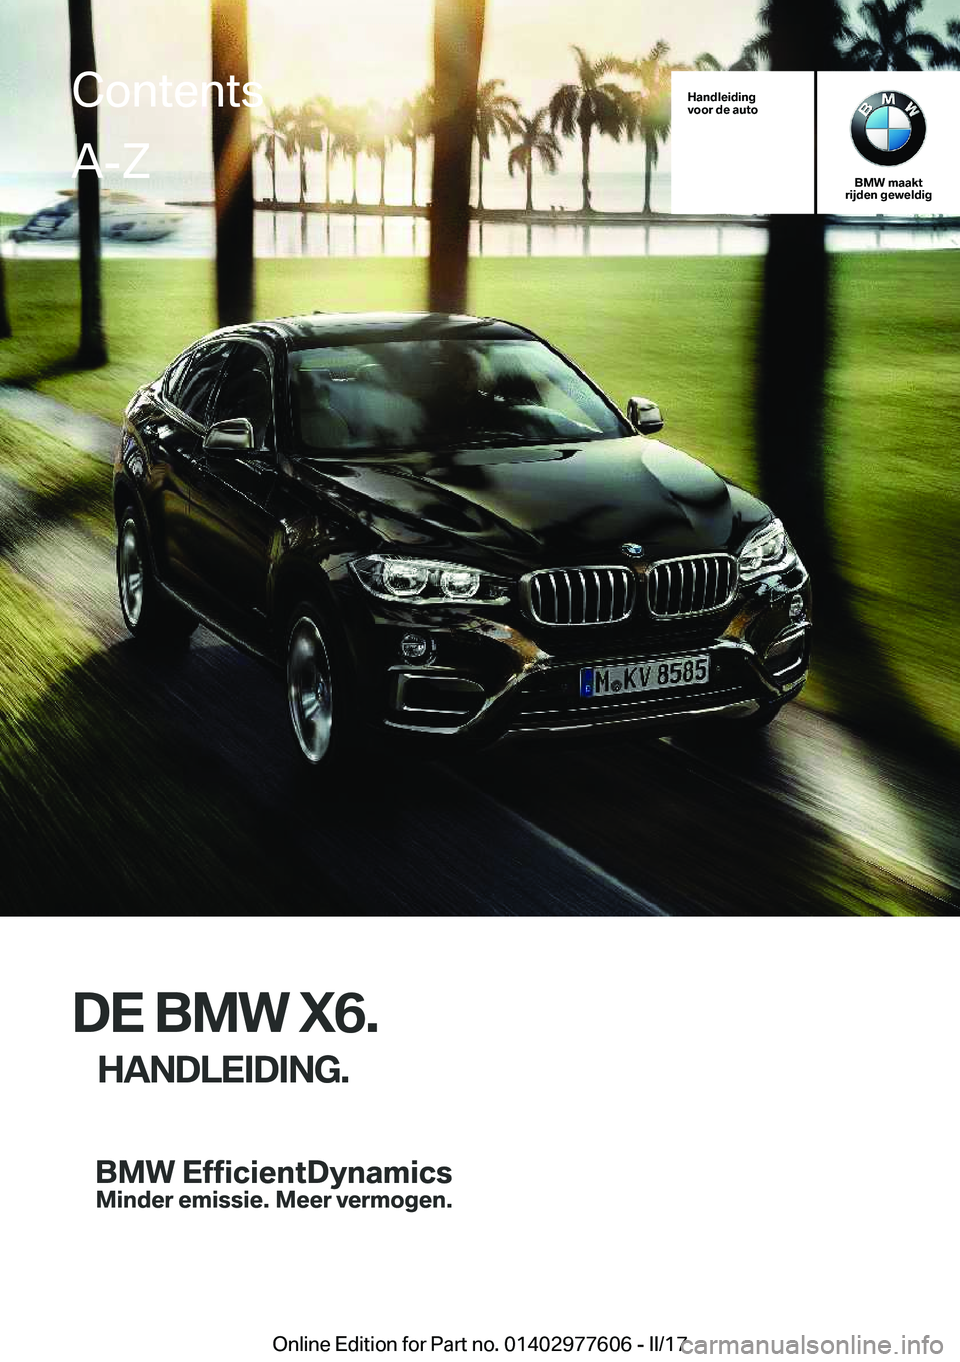 BMW X6 2017  Instructieboekjes (in Dutch) �H�a�n�d�l�e�i�d�i�n�g
�v�o�o�r��d�e��a�u�t�o
�B�M�W��m�a�a�k�t
�r�i�j�d�e�n��g�e�w�e�l�d�i�g
�D�E��B�M�W��X�6�.
�H�A�N�D�L�E�I�D�I�N�G�.
�C�o�n�t�e�n�t�s�A�-�Z
�O�n�l�i�n�e� �E�d�i�t�i�o�n� �f�